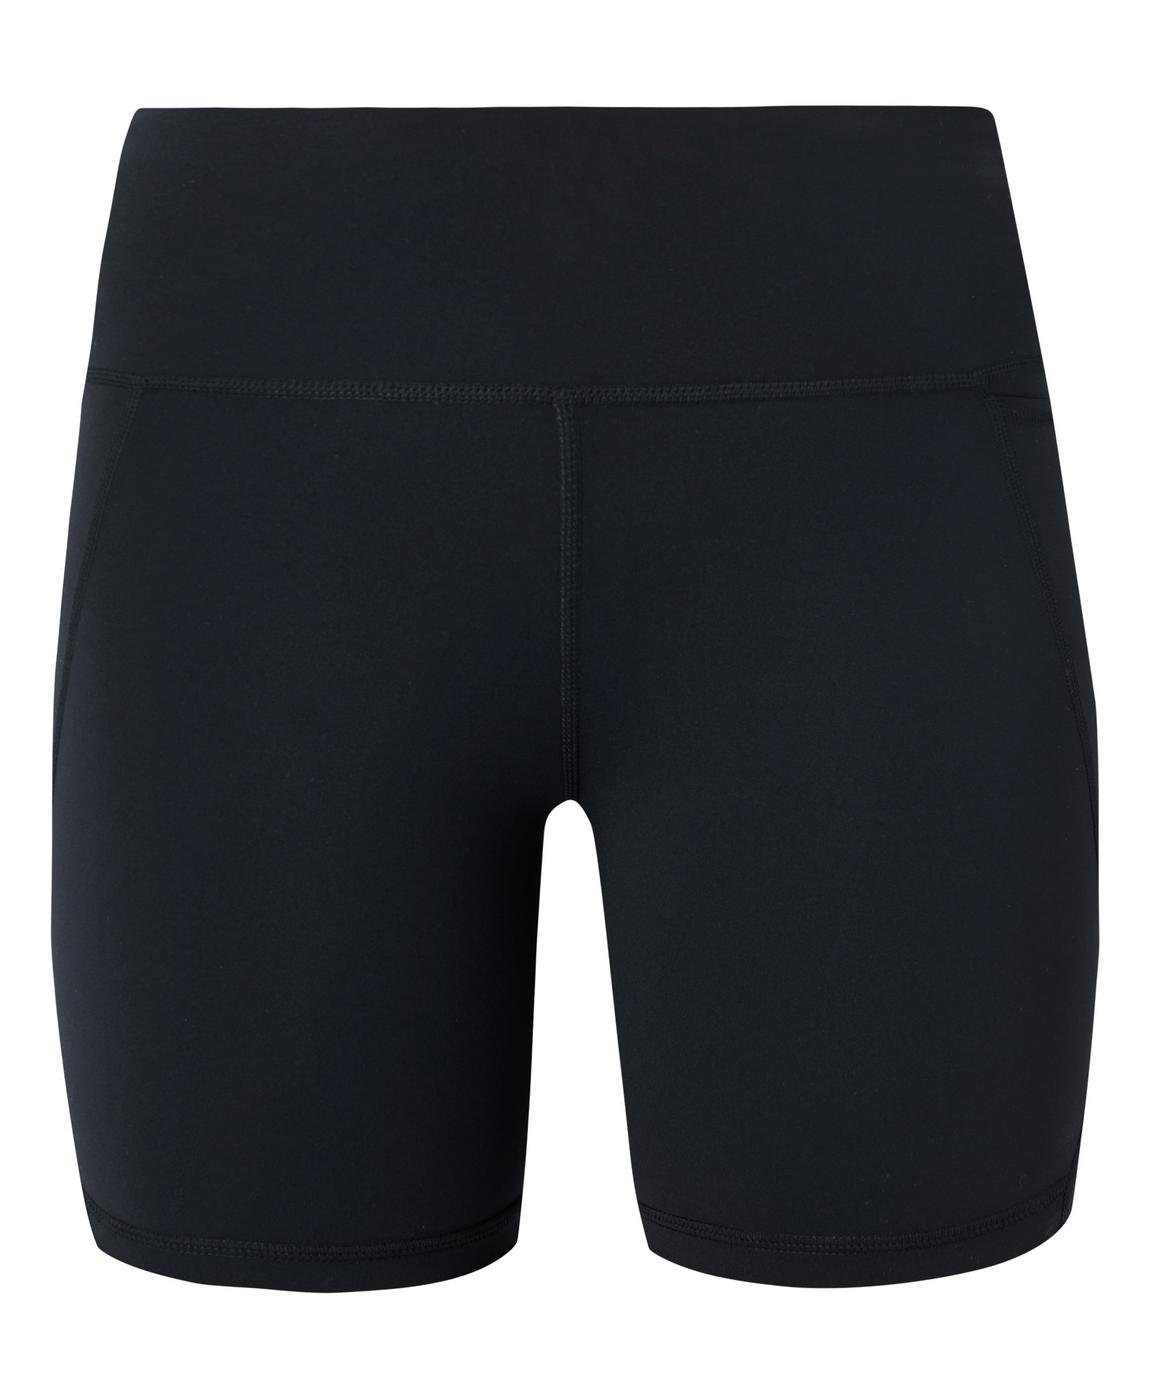 Power 6 Bike Shorts - Black, Women's Shorts + Skorts